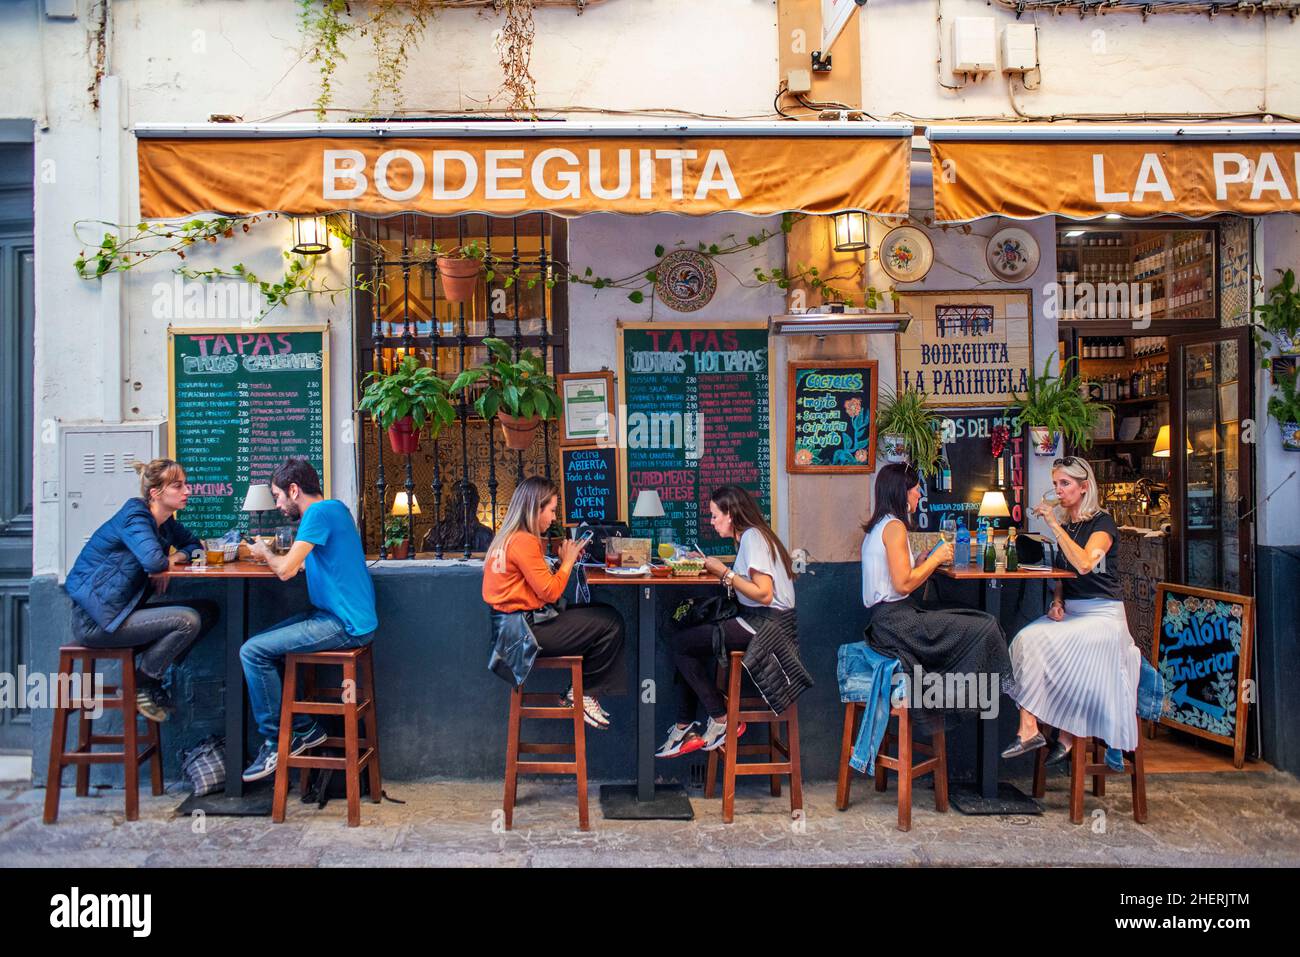 Locals enjoying food in Bodeguita La Parihuela tapas bar in Santa Cruz district Seville Antalusia Spain Stock Photo